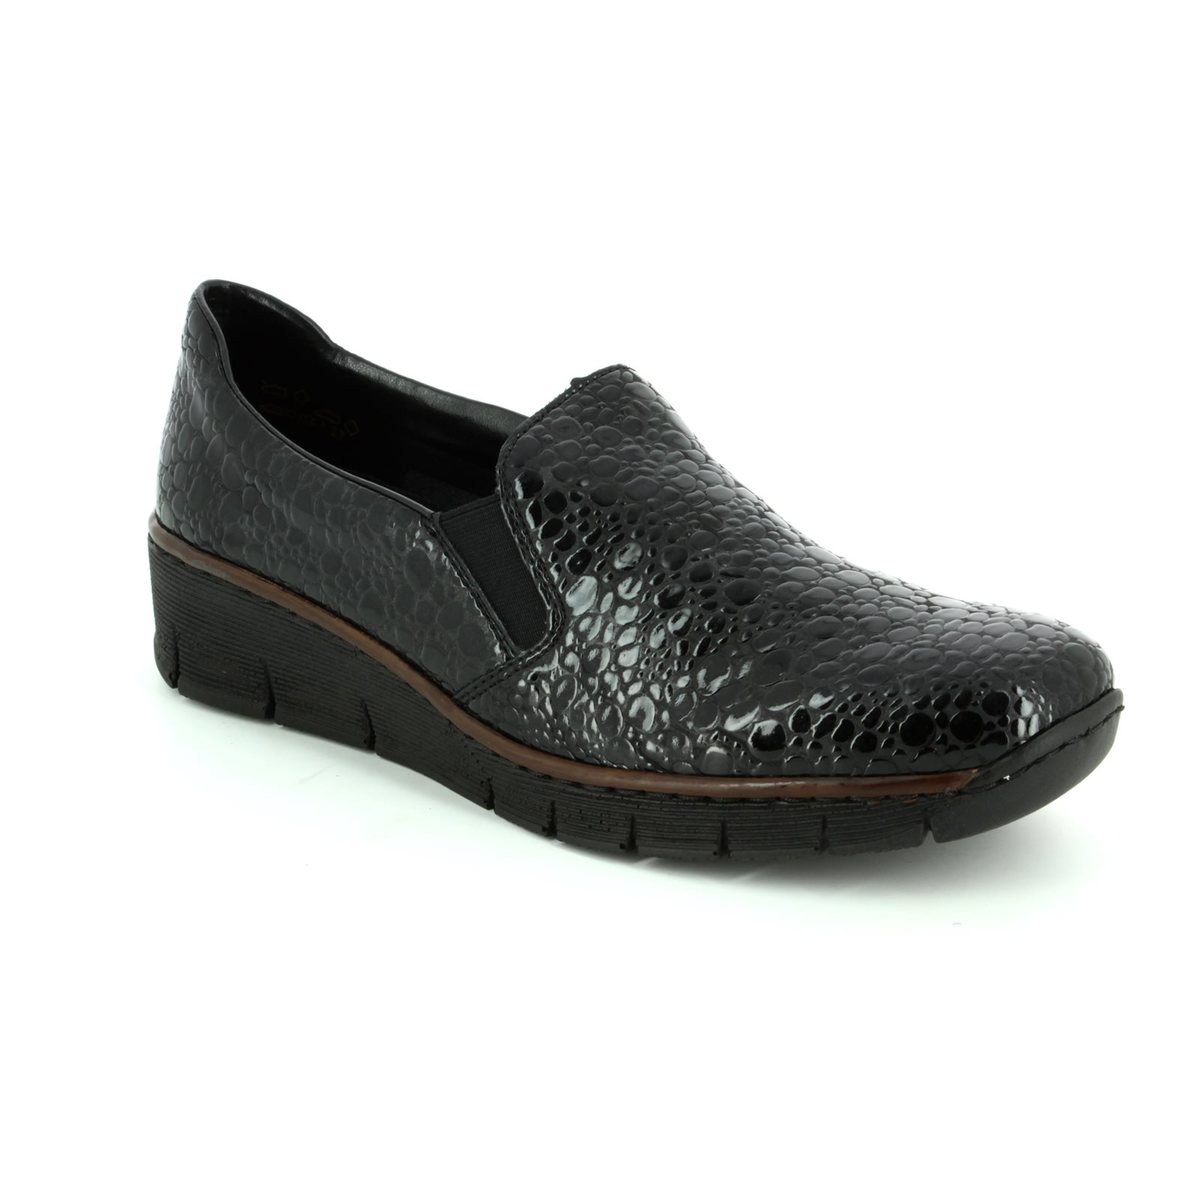 Rieker Bocciago Black Croc Womens Comfort Slip On Shoes 53766-45 In Size 41 In Plain Black Croc Effect